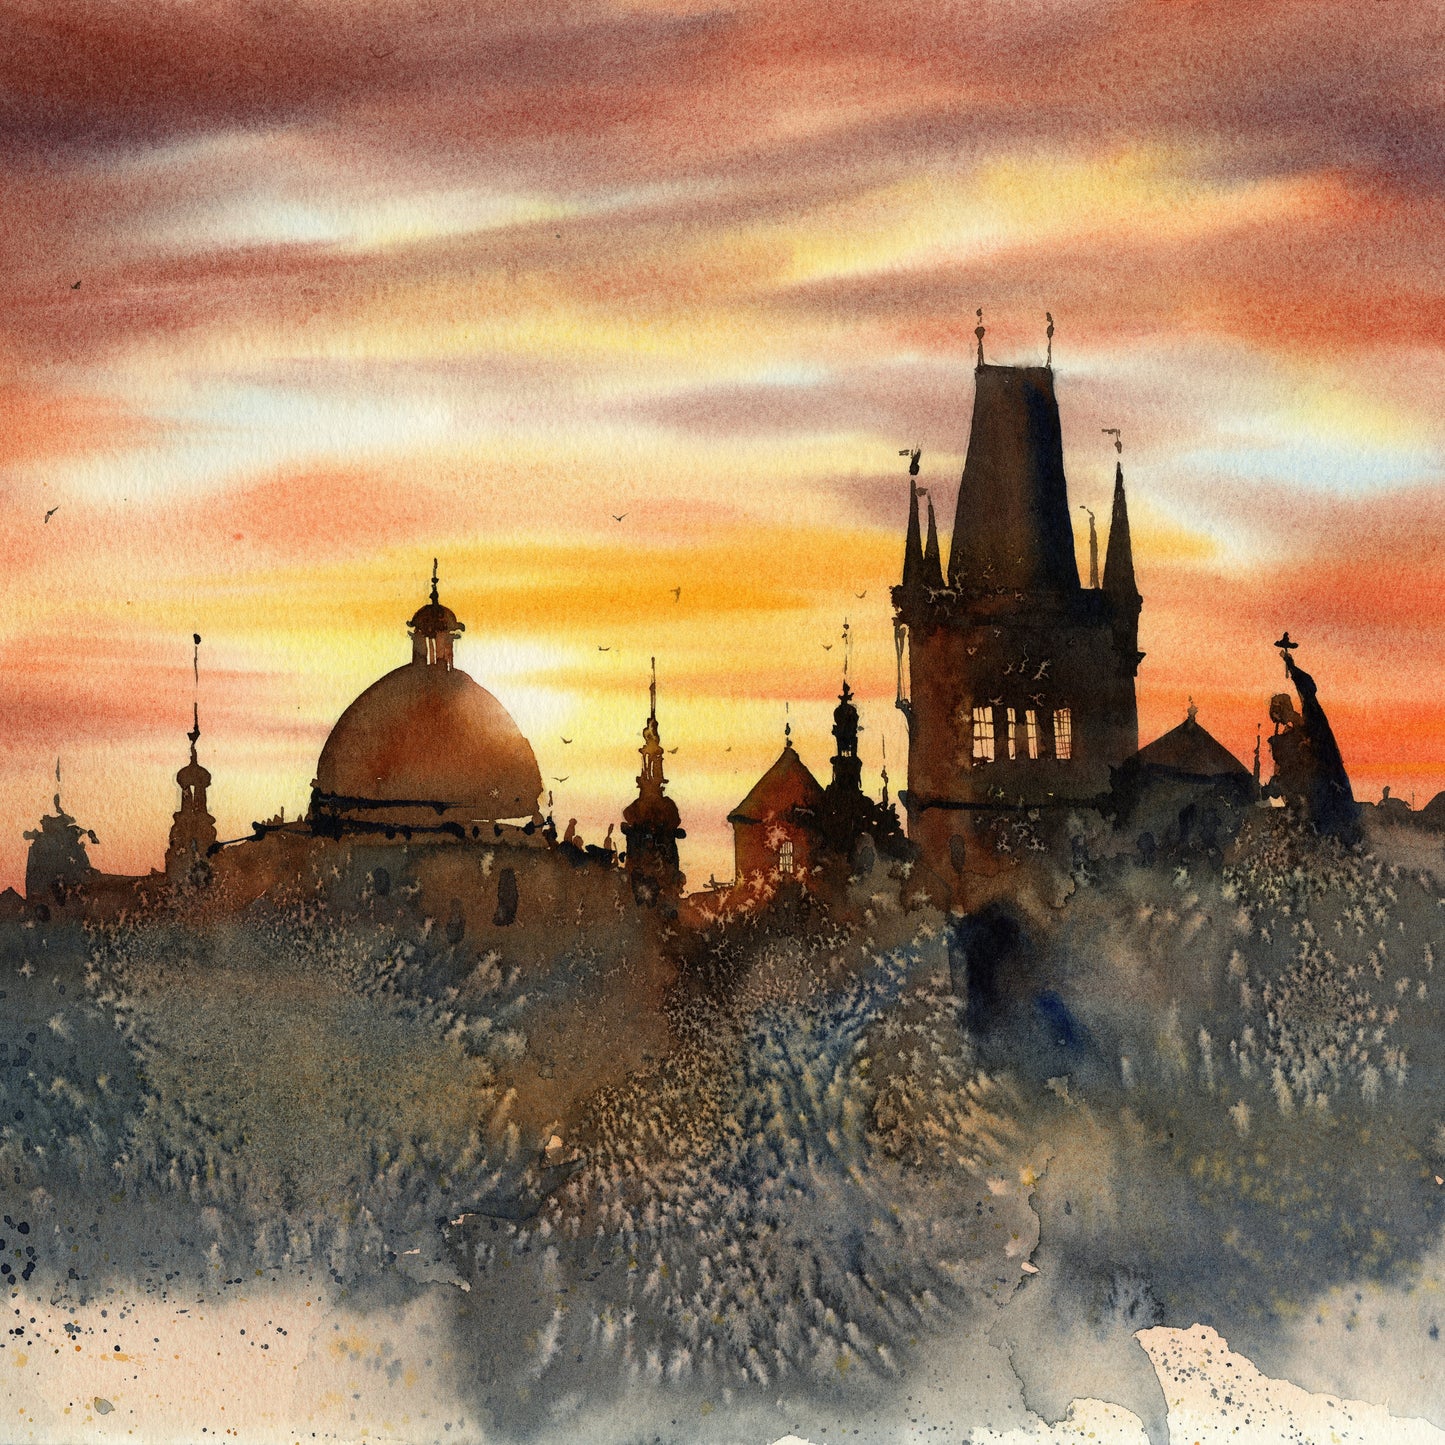 Prague Art Print, Czech Wall Art, Charles Bridge Sunset, Travel Poster, Gift Idea, Watercolor Painting, Europa Architecture